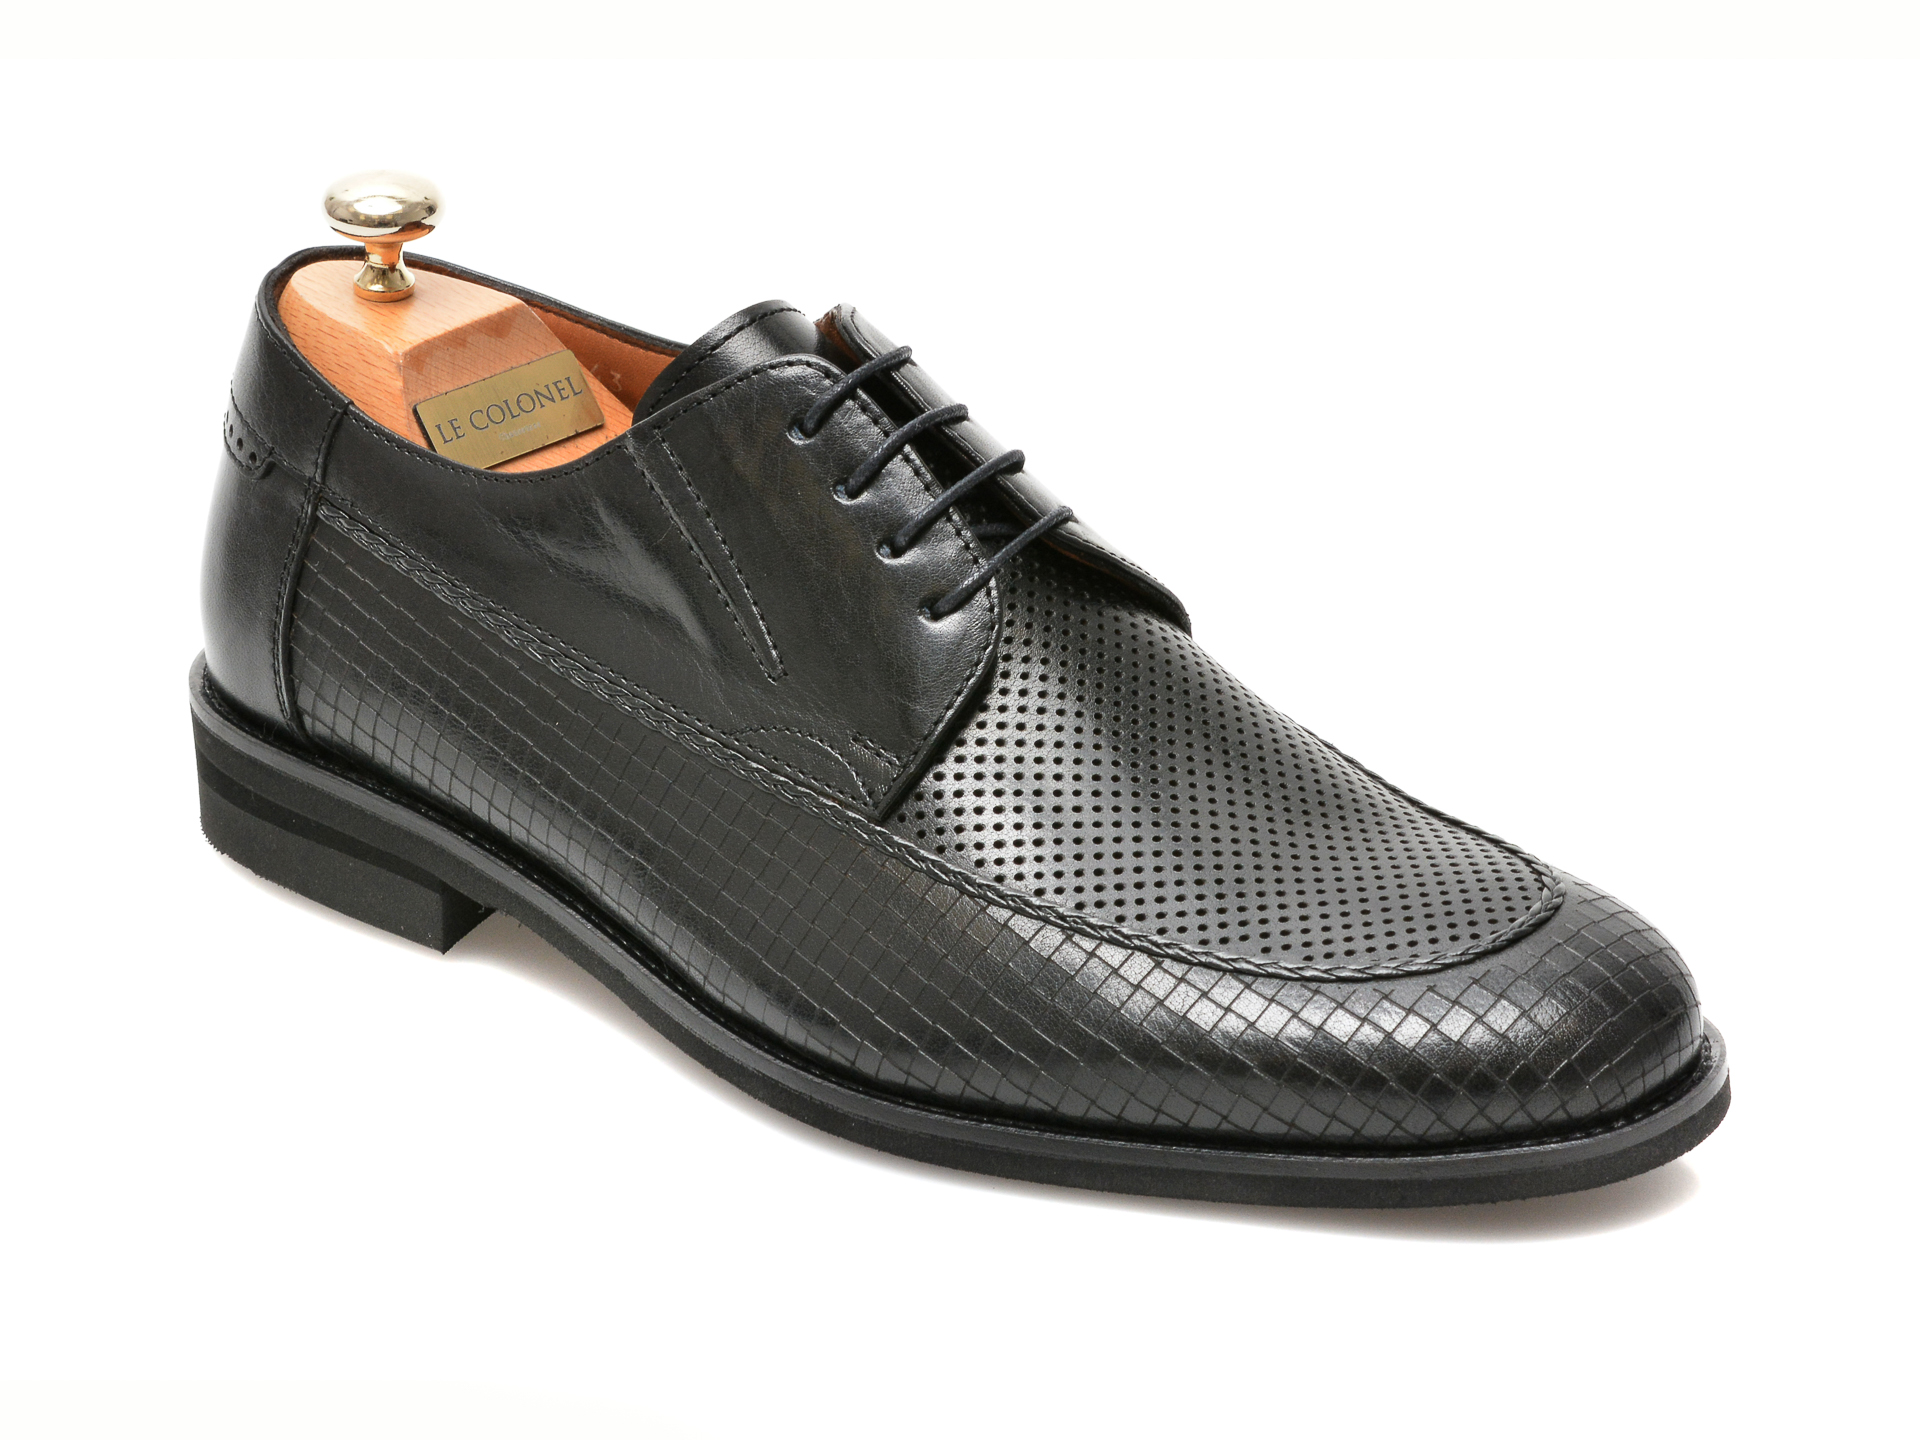 Pantofi LE COLONEL negri, 48856, din piele naturala